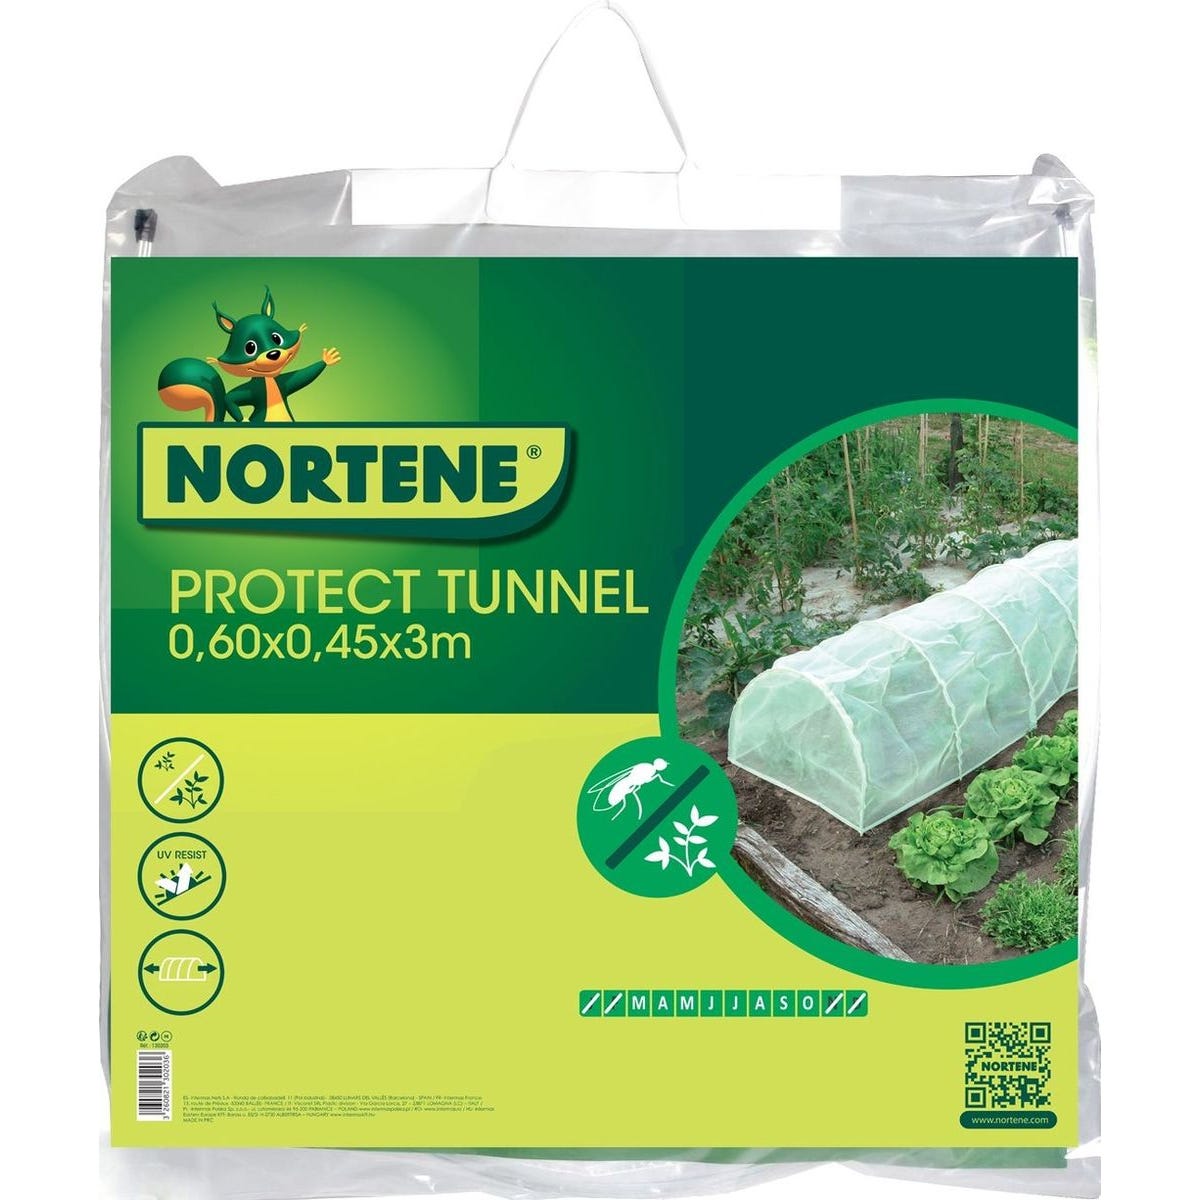 Tunnel accordéon avec filet anti-insectes "Protect Tunnel" - 0,60 x 0,45 x 3 m 2